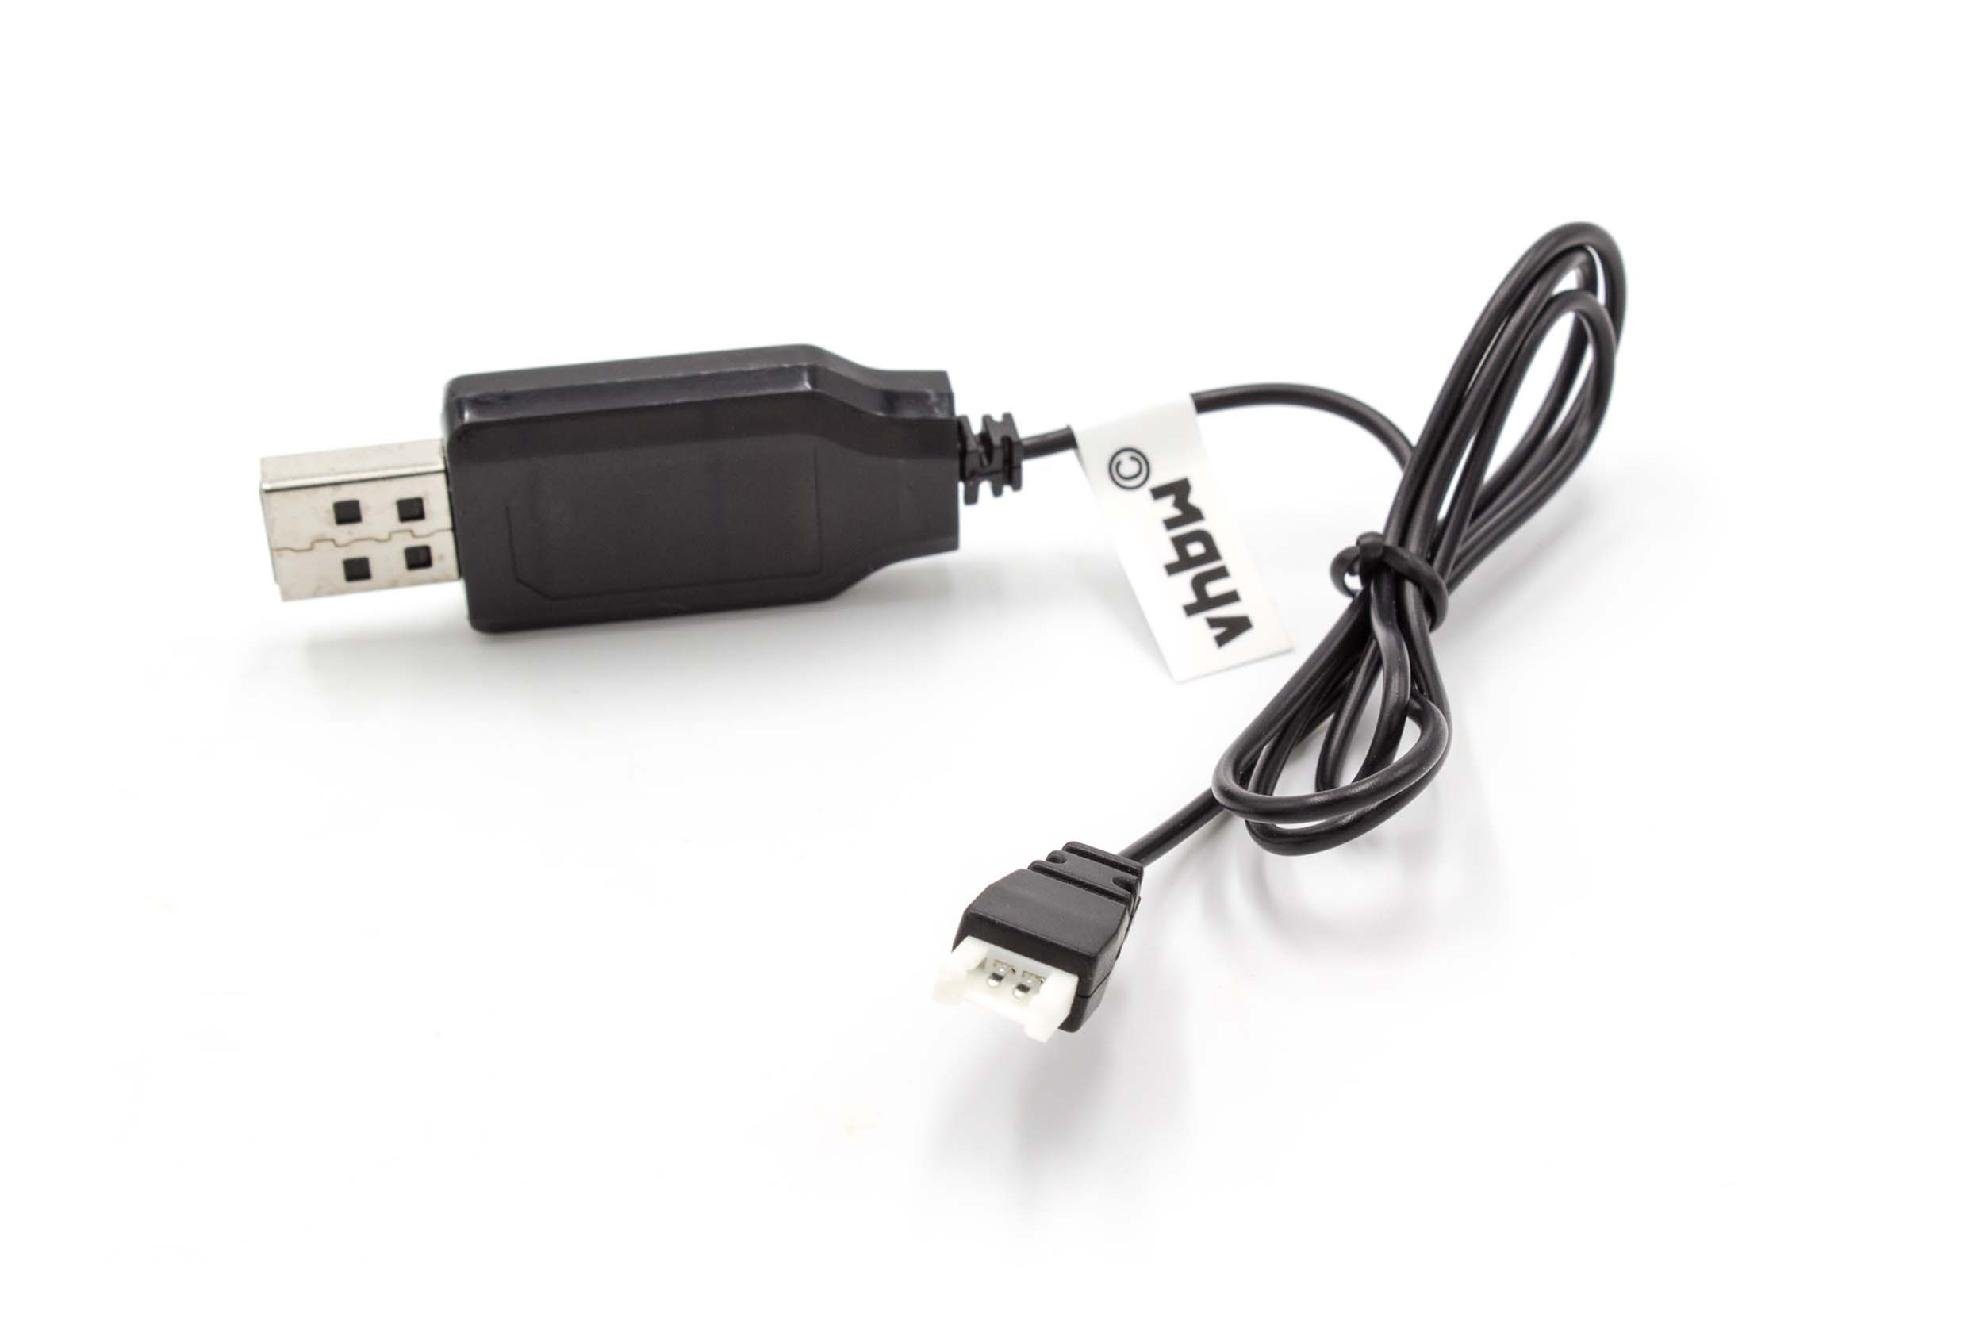 vhbw USB-Kabel, passend für Hubsan X4 H107, H107L C, H107L C D, U816, V930, V977 Modellbau Drohne